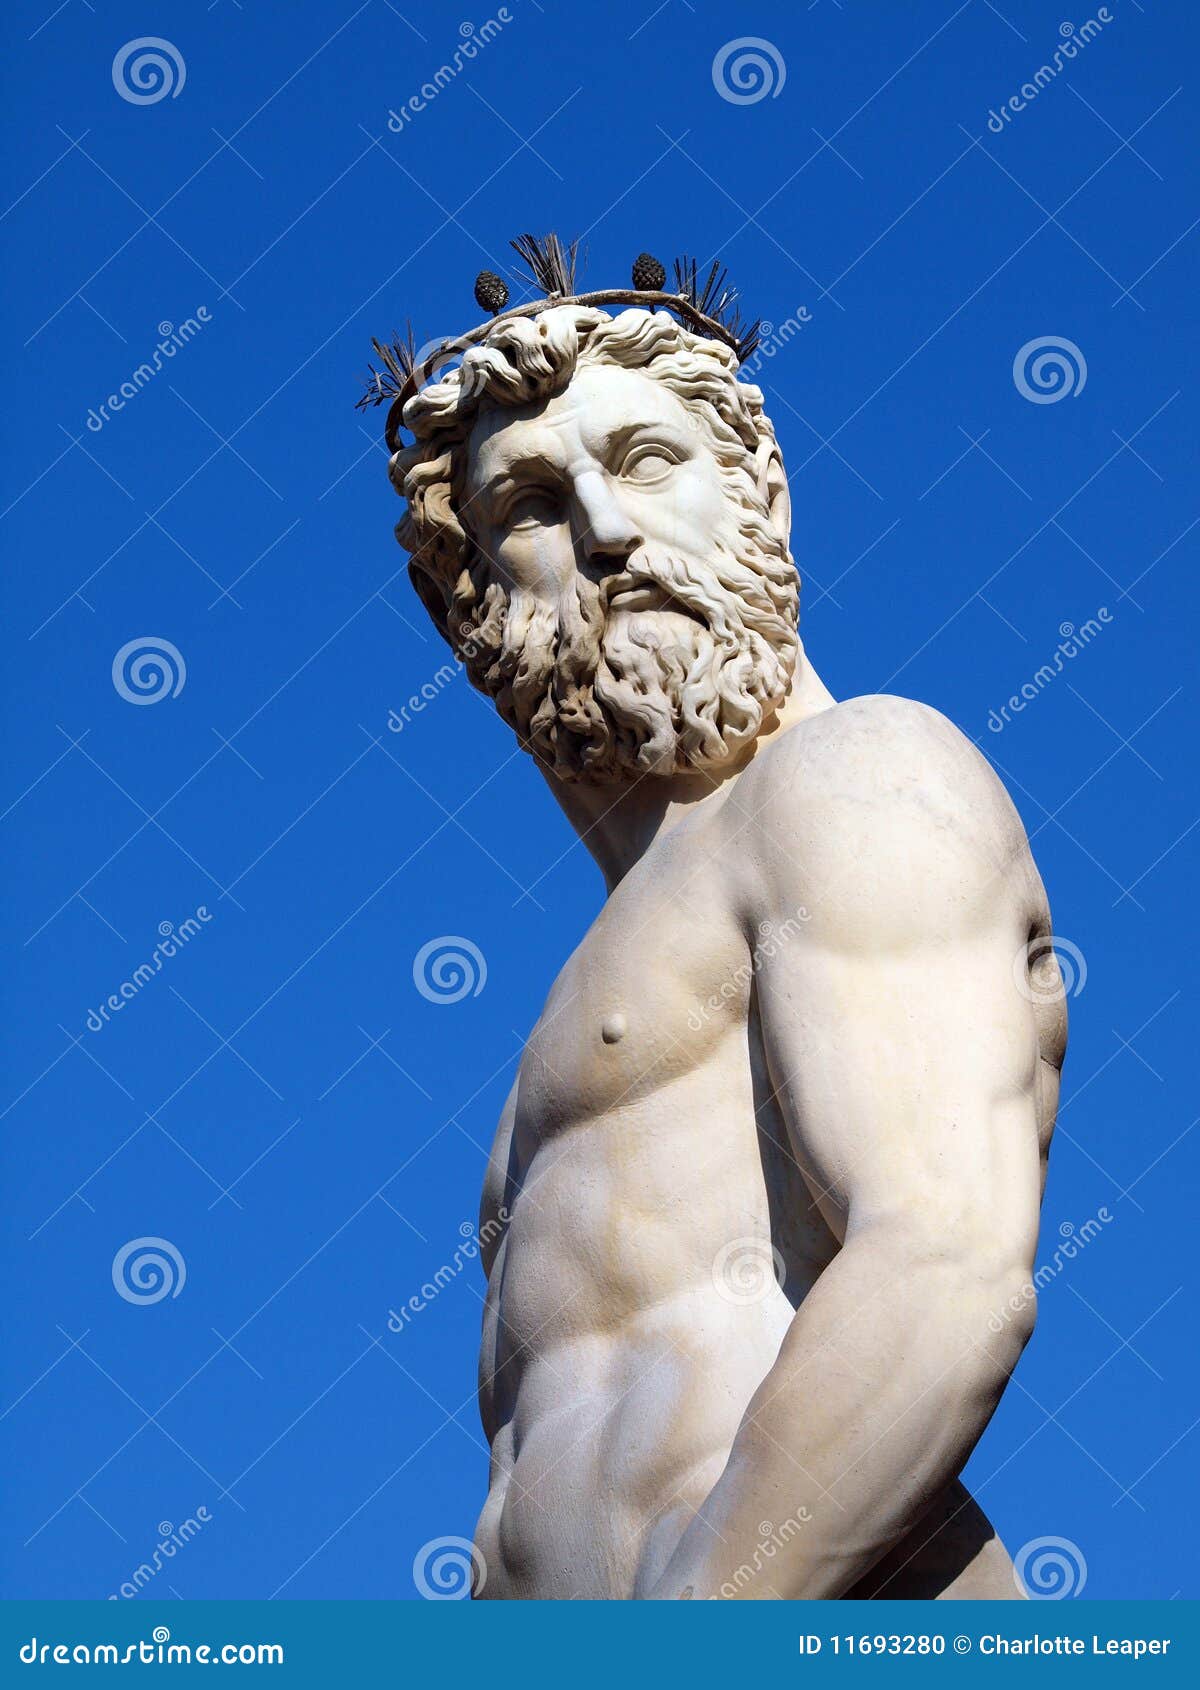 Featured image of post Neptune Roman God Statues / Poseidon neptune greek roman god of the sea and storms statue sculpture figure.